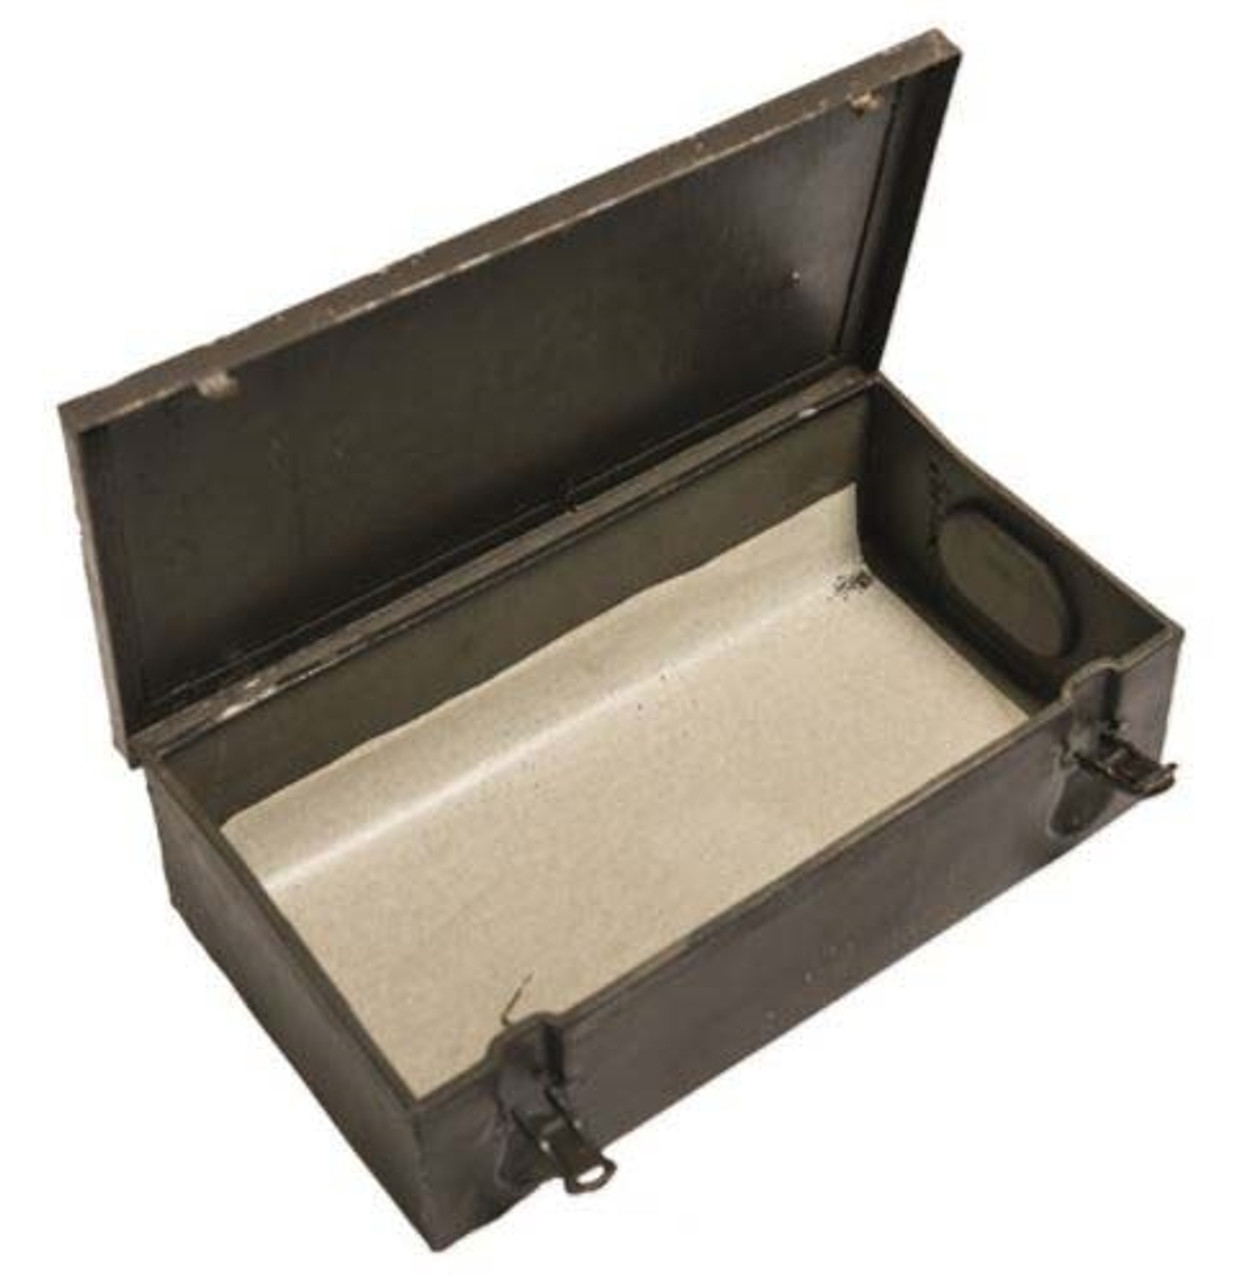 Original WWII German First-Aid Box